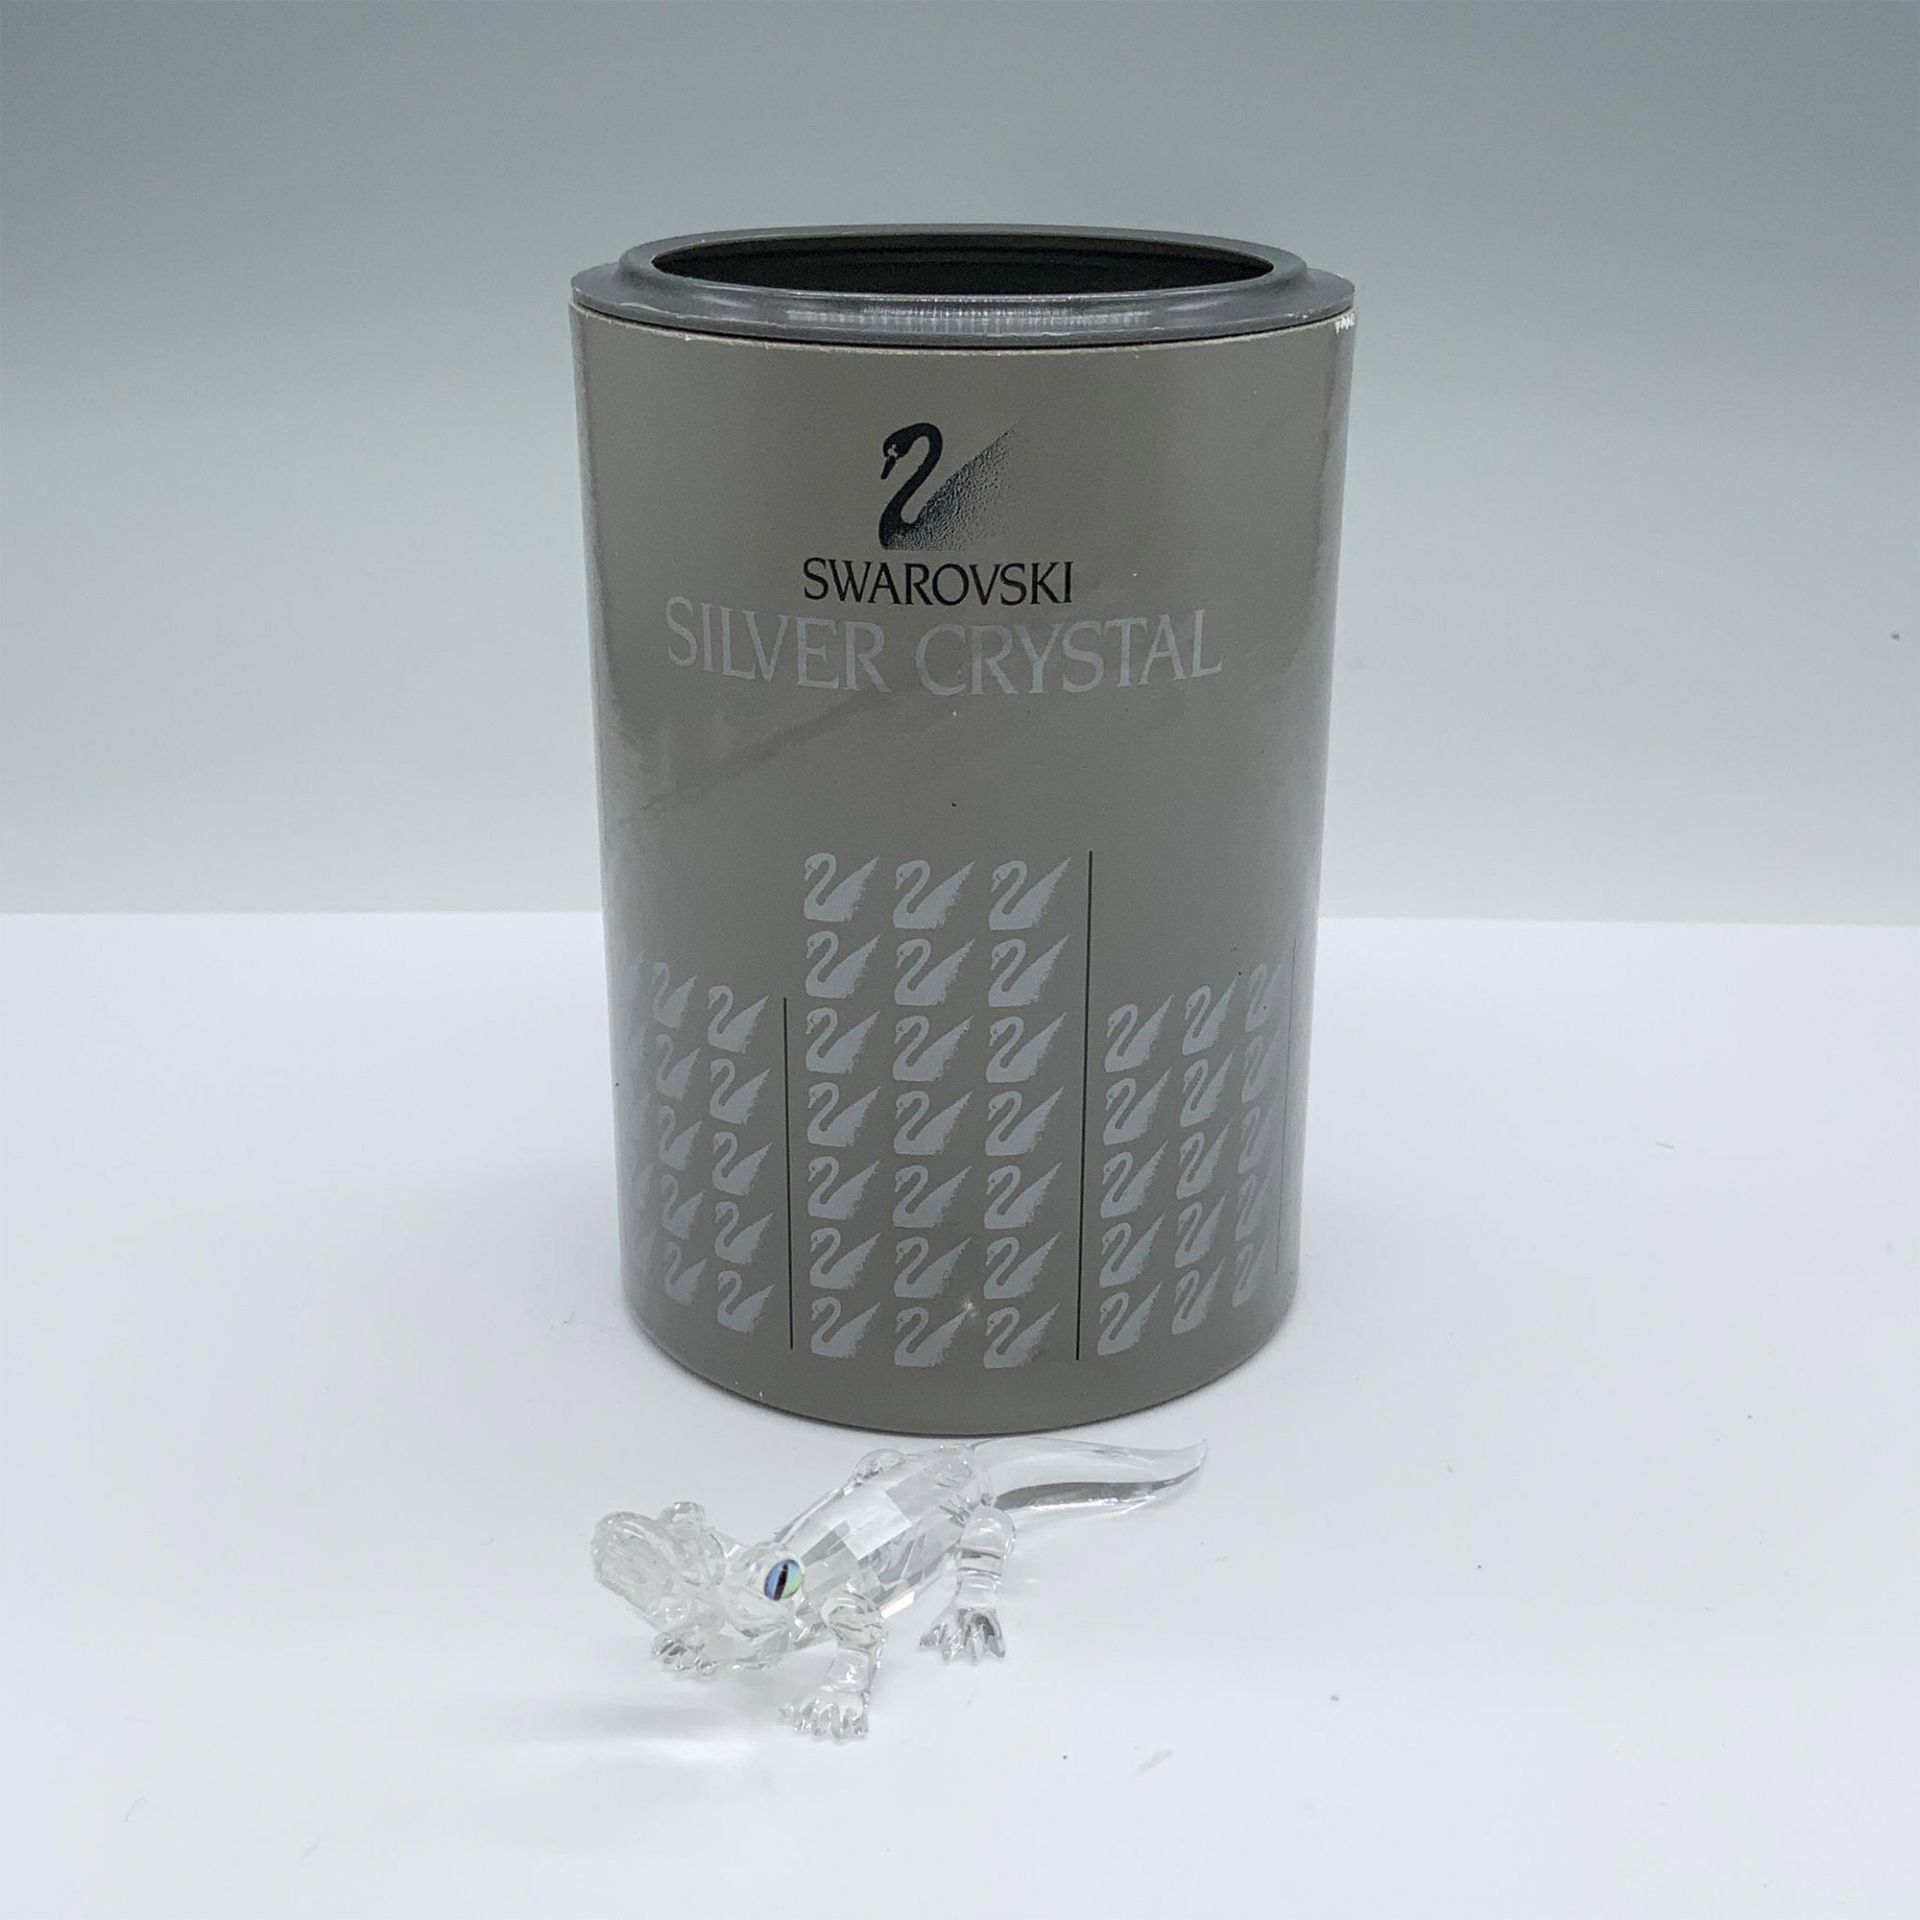 Swarovski Silver Crystal Figurine, Alligator 221629 - Image 4 of 4